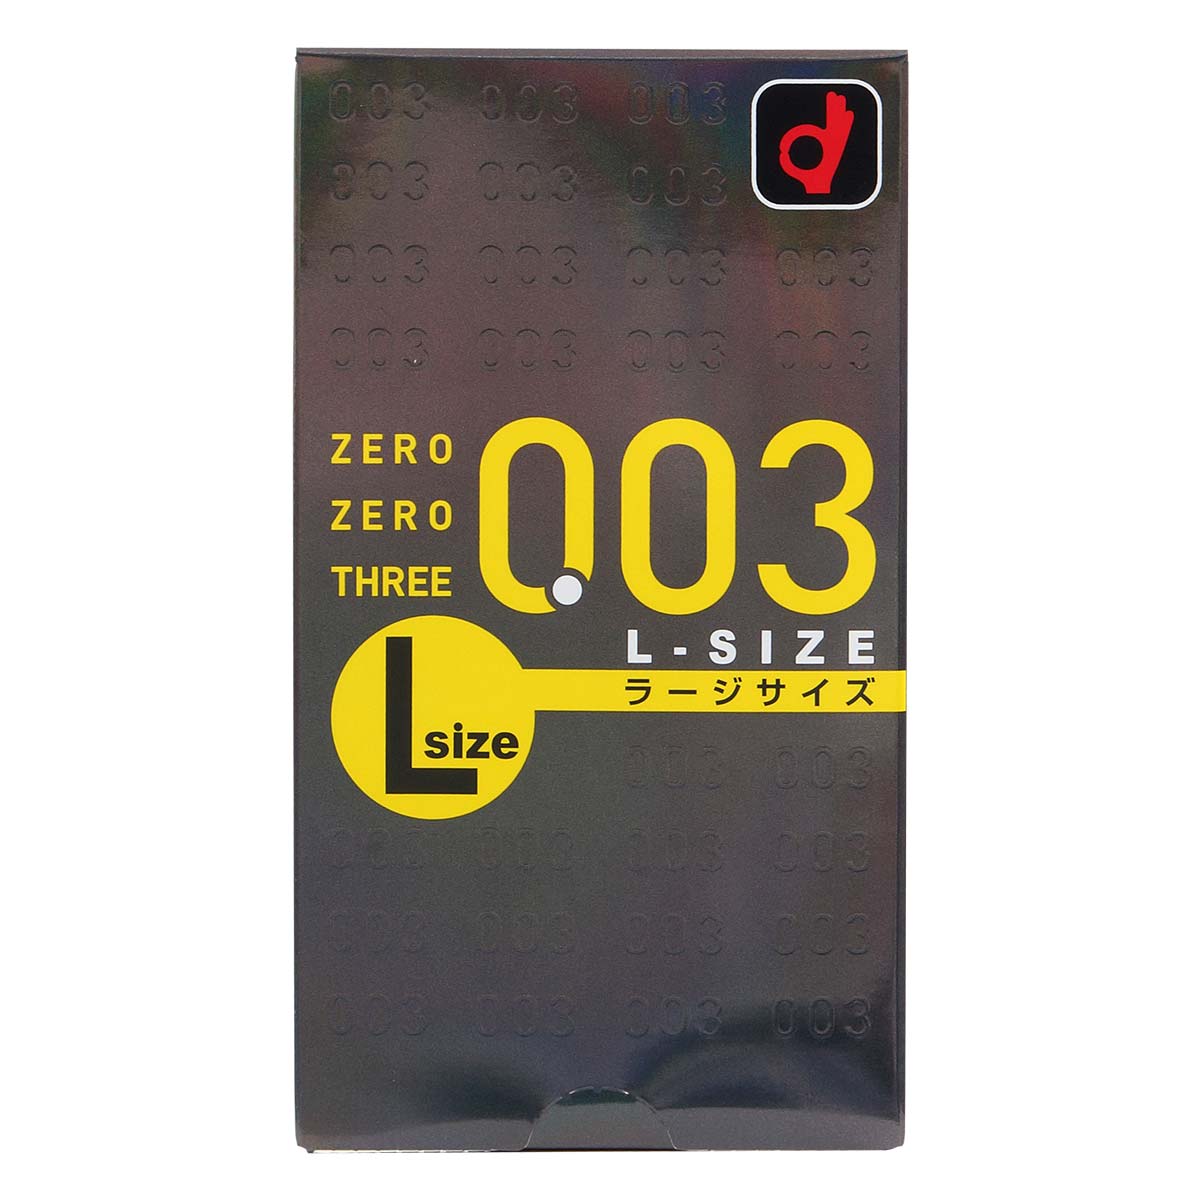 Zero Zero Three 0.03 L-size (Japan Edition) 58mm 10's Pack Latex Condom-p_2